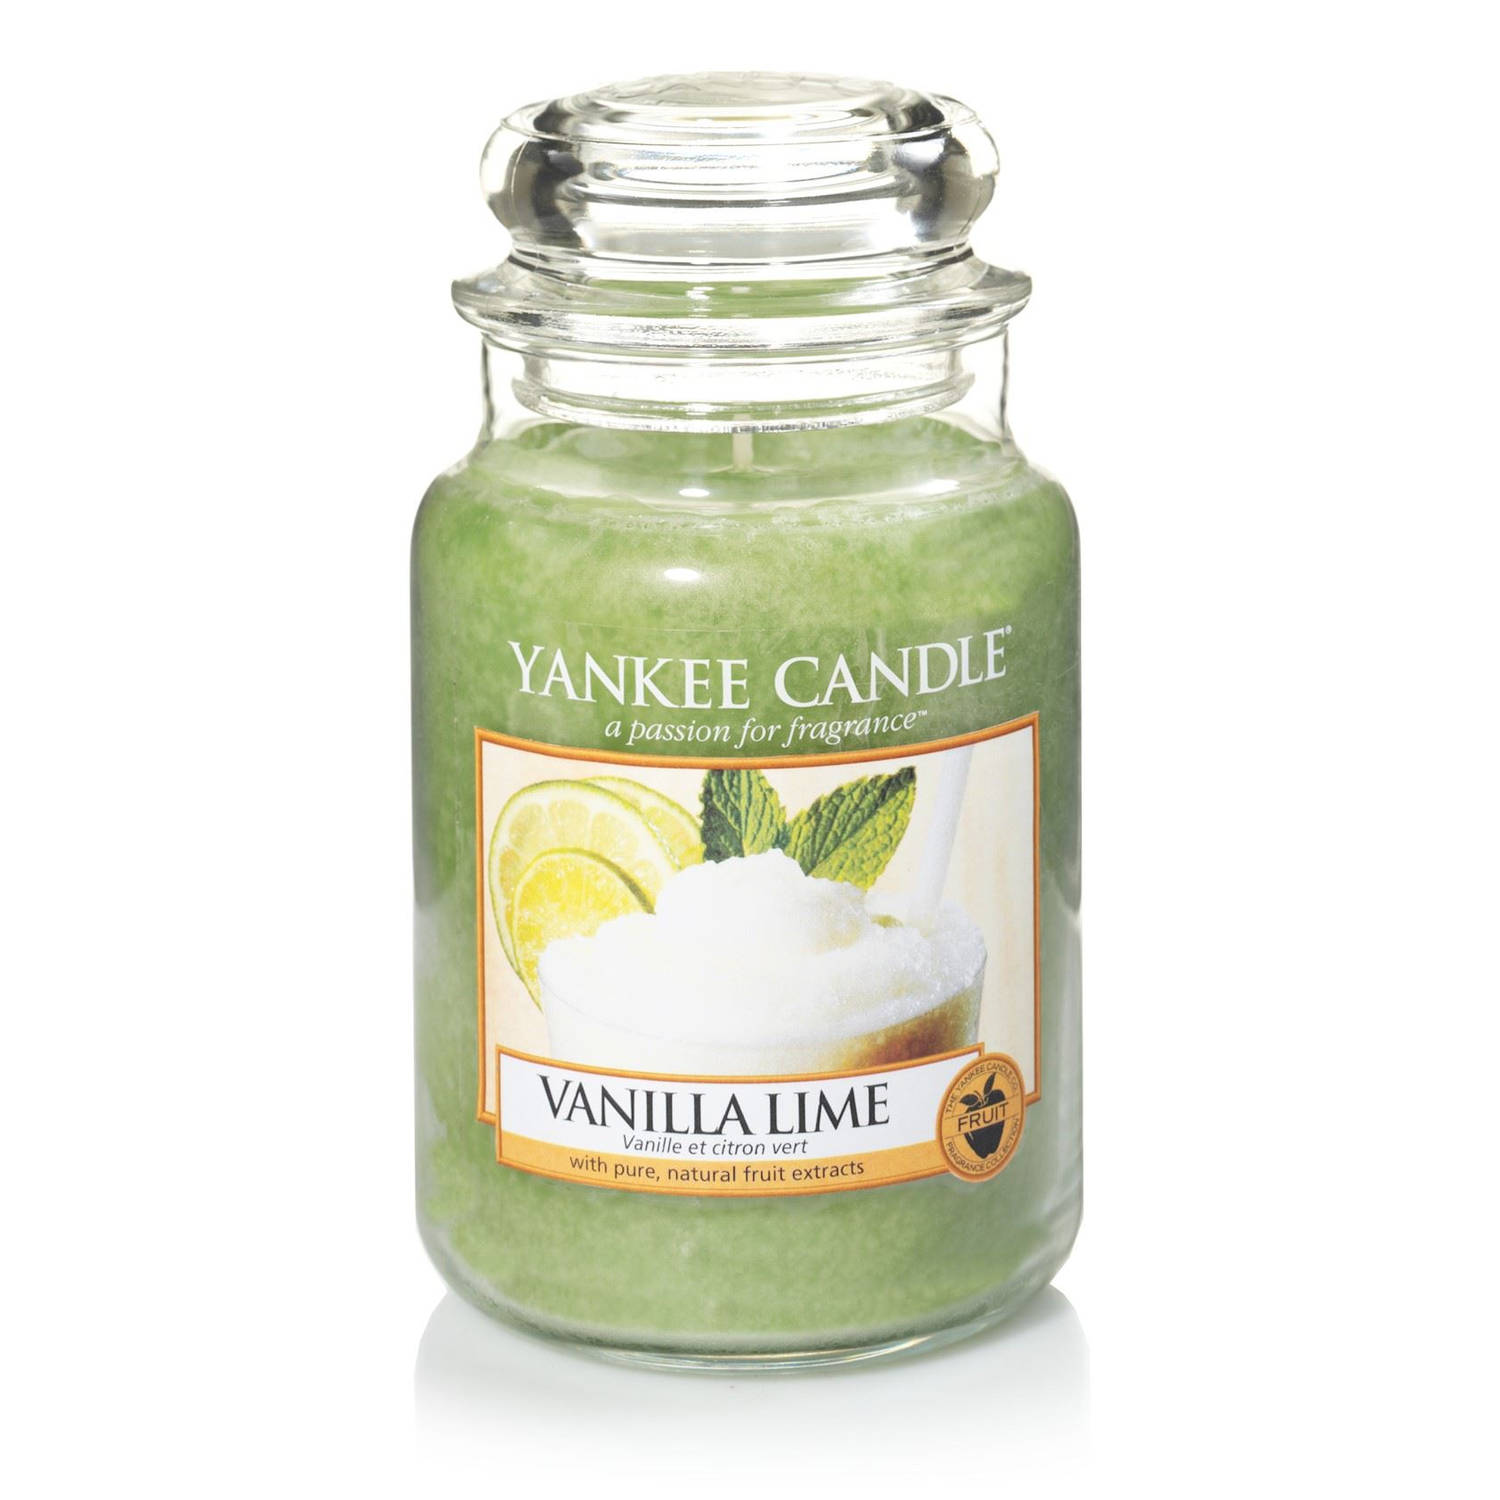 Yankee Candle - Vanilla Lime geurkaars - Large Jar - Tot 150 branduren